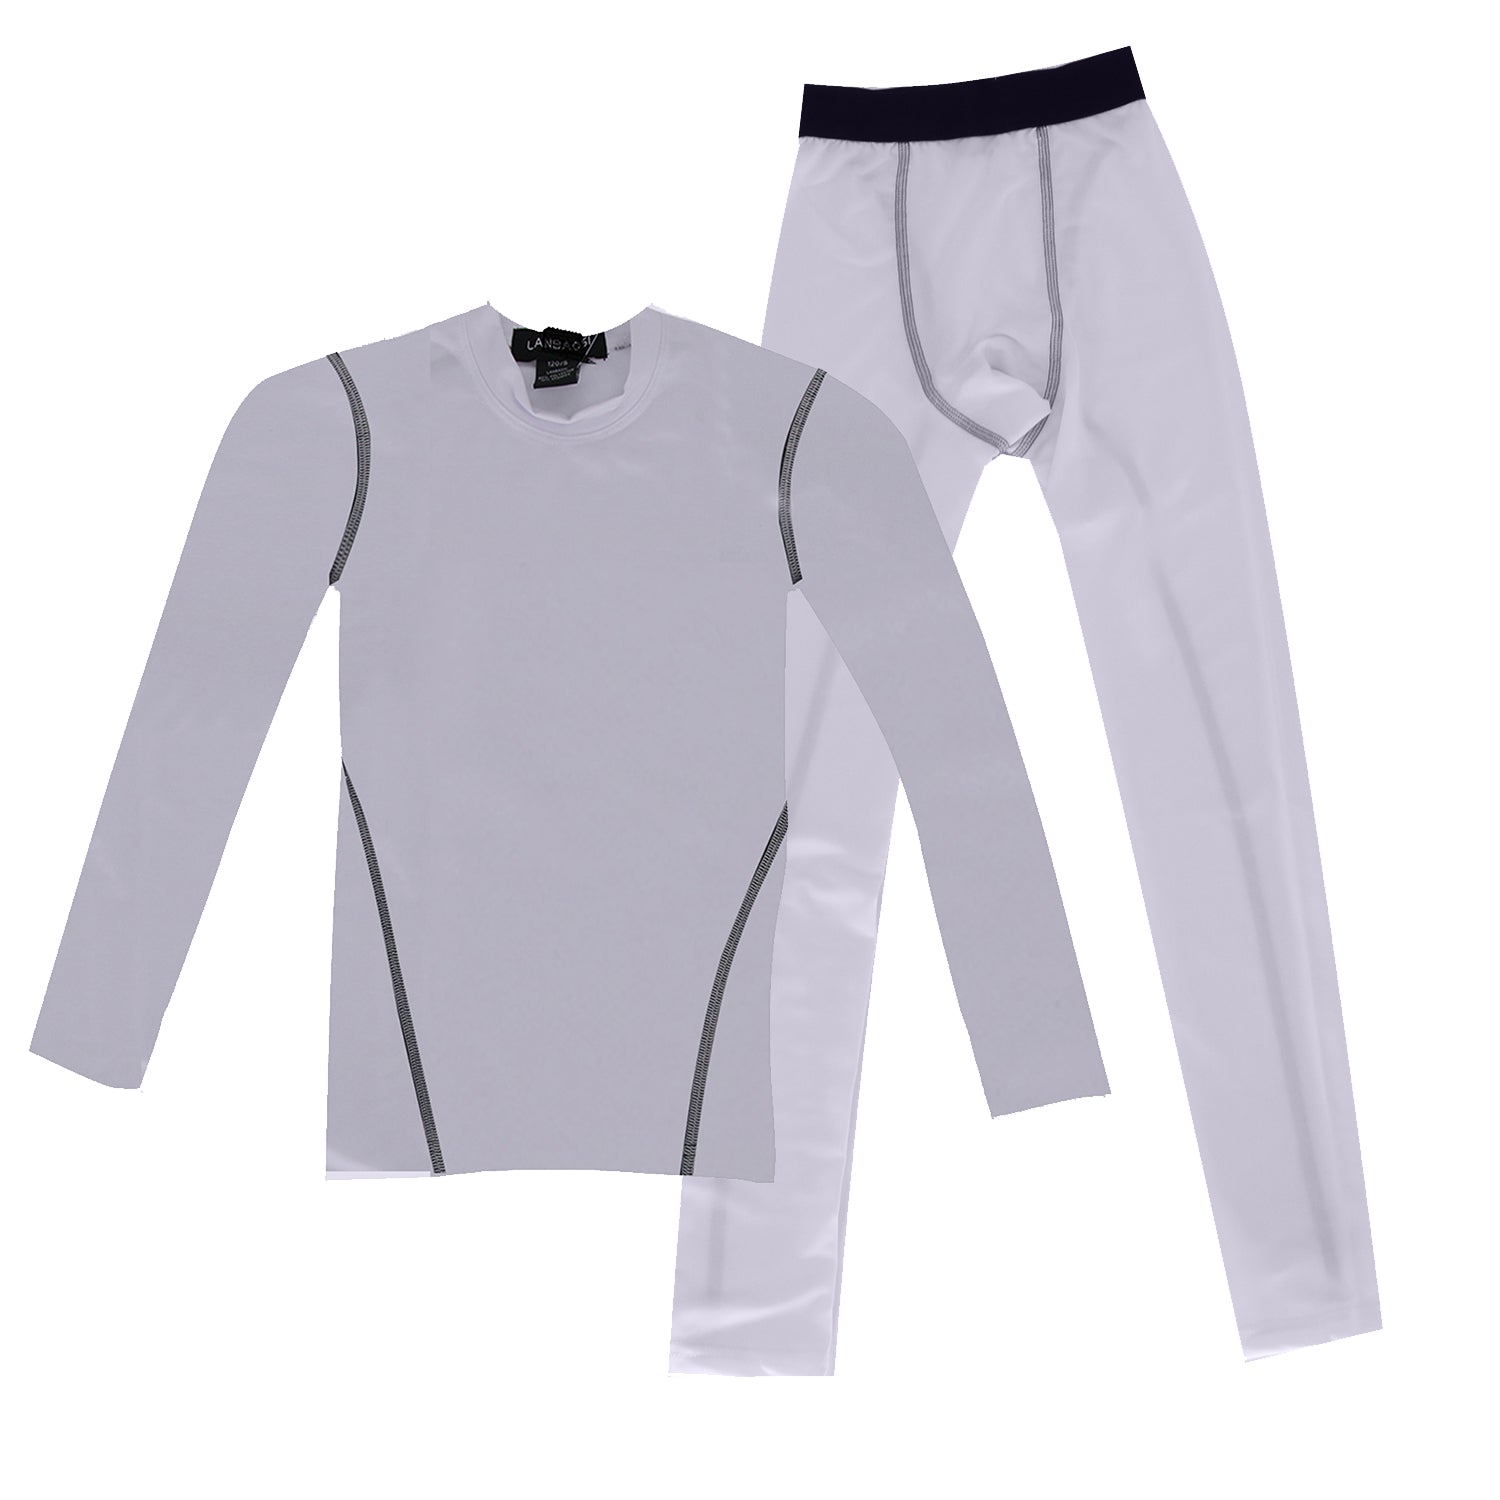 Boys & Girls Long Sleeve Compression Shirts and Pant 2 Pcs Set LANBAOSI